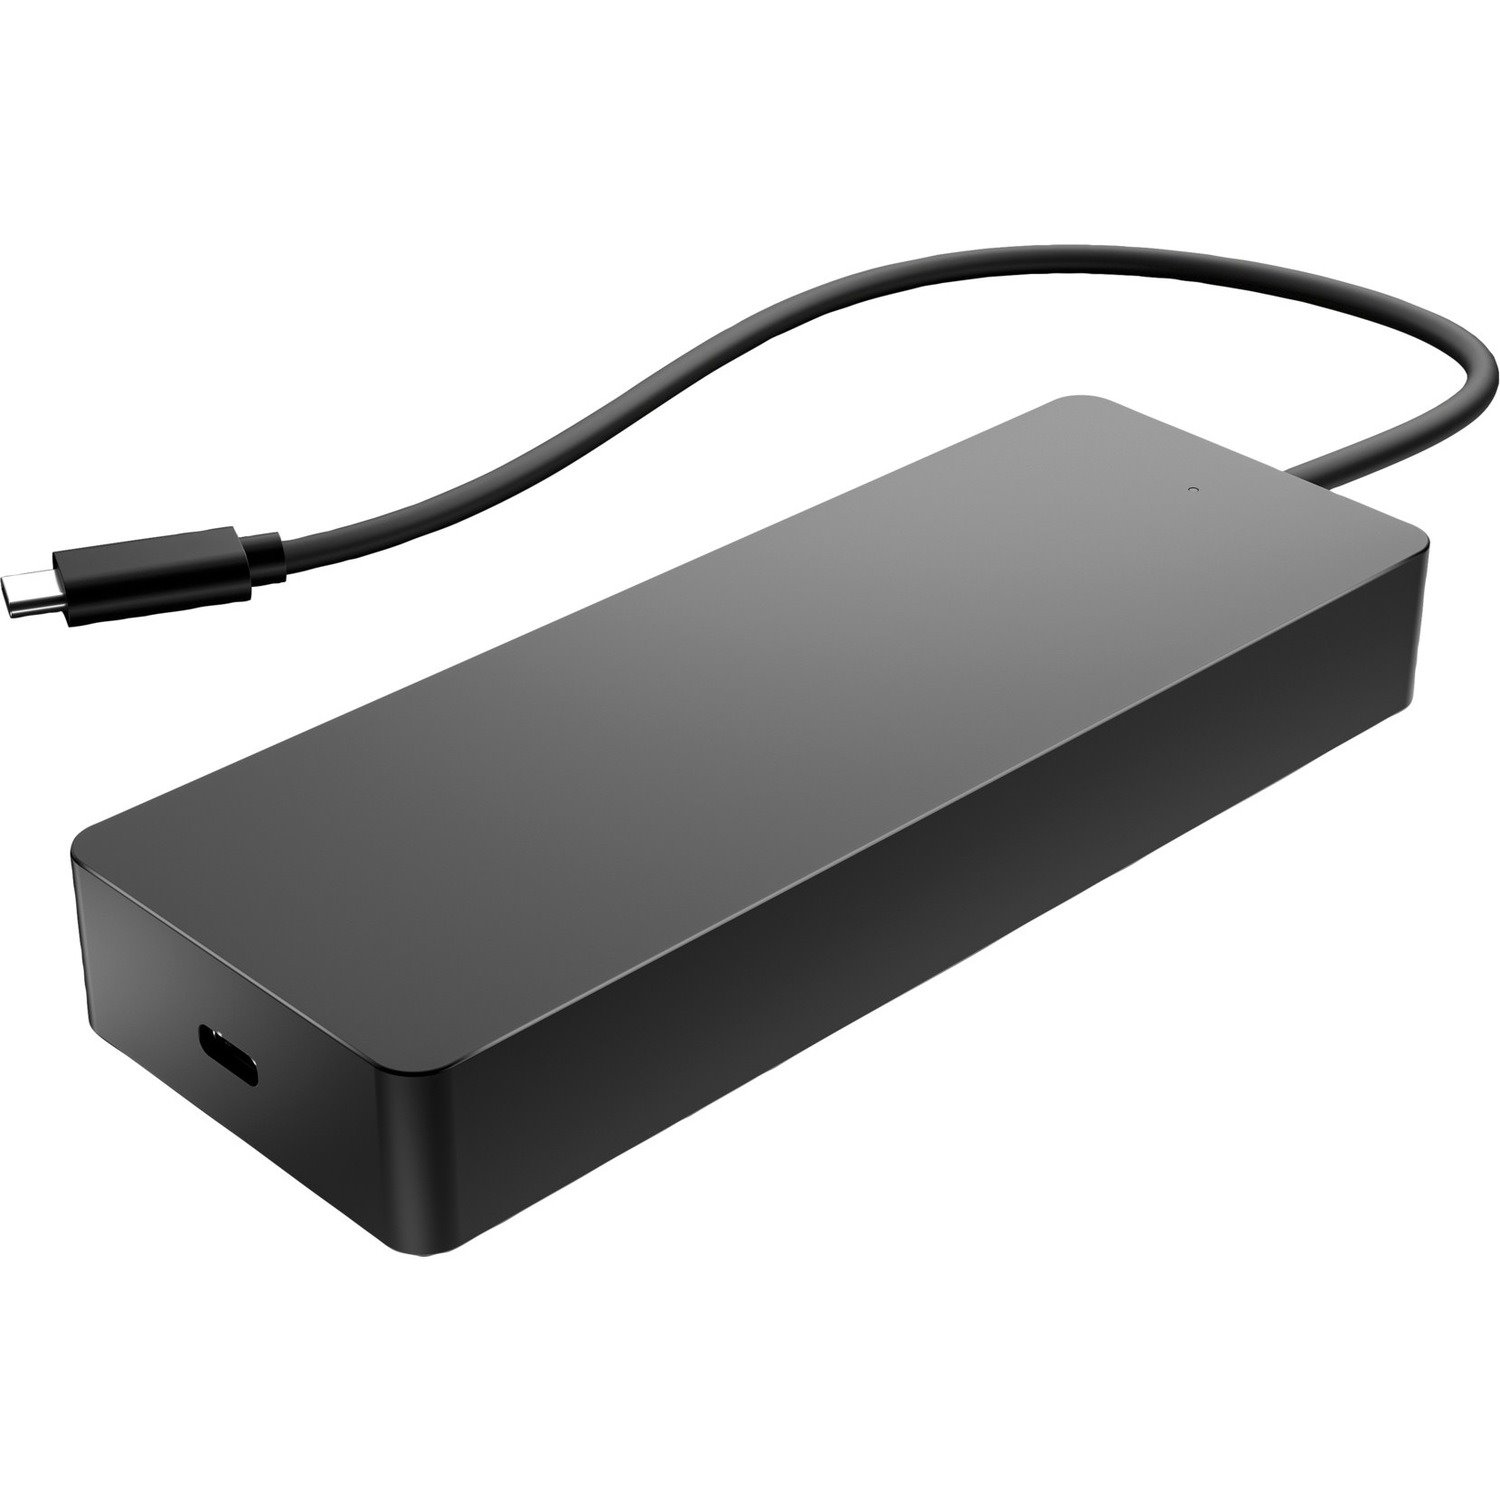 HP USB Type C Docking Station for Desktop PC/Notebook/Monitor - Black